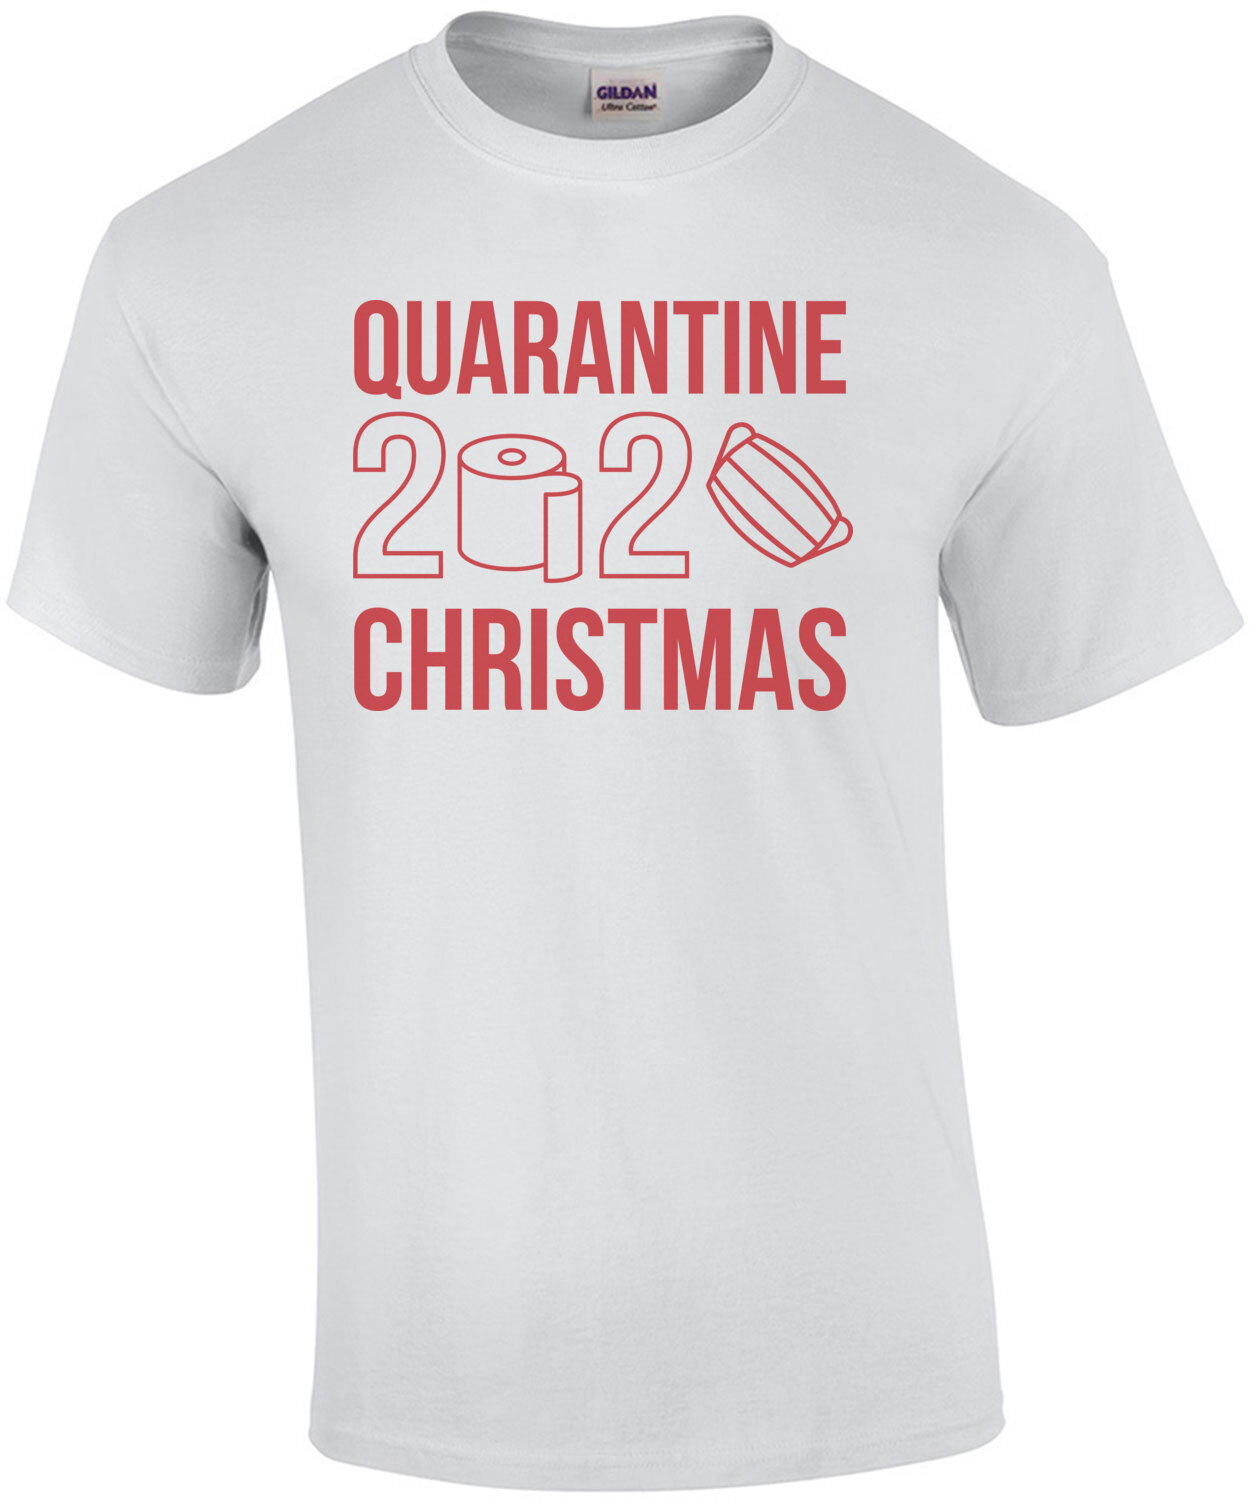 Quarantine Christmas 2020 - Toilet Paper & Facemask - Covid-19 - Christmas T-Shirt